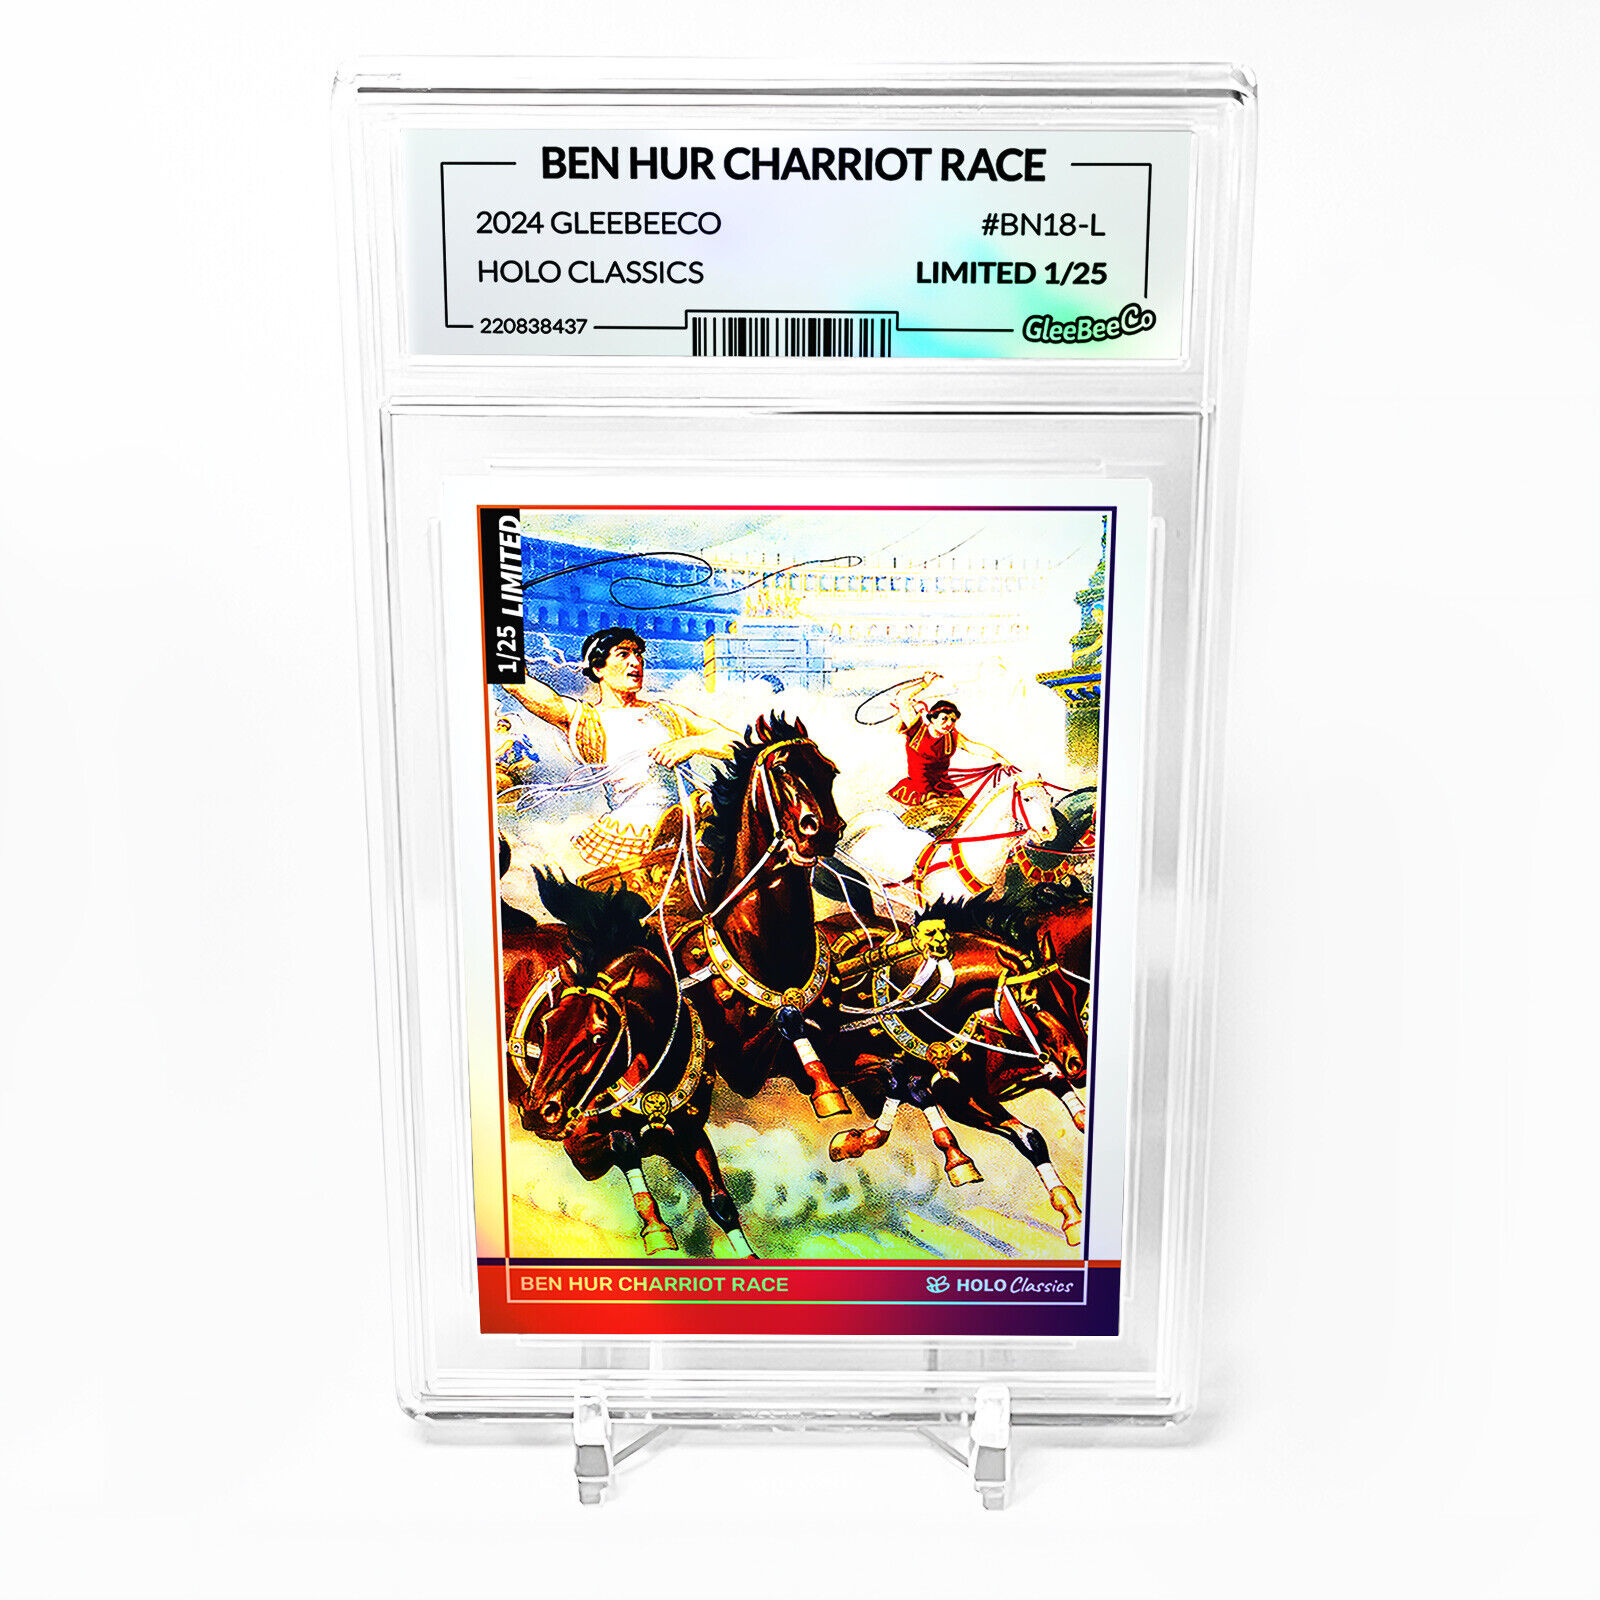 BEN HUR CHARRIOT RACE Ben Hur Art Card 2024 GleeBeeCo Holo Classics #BN18-L /25